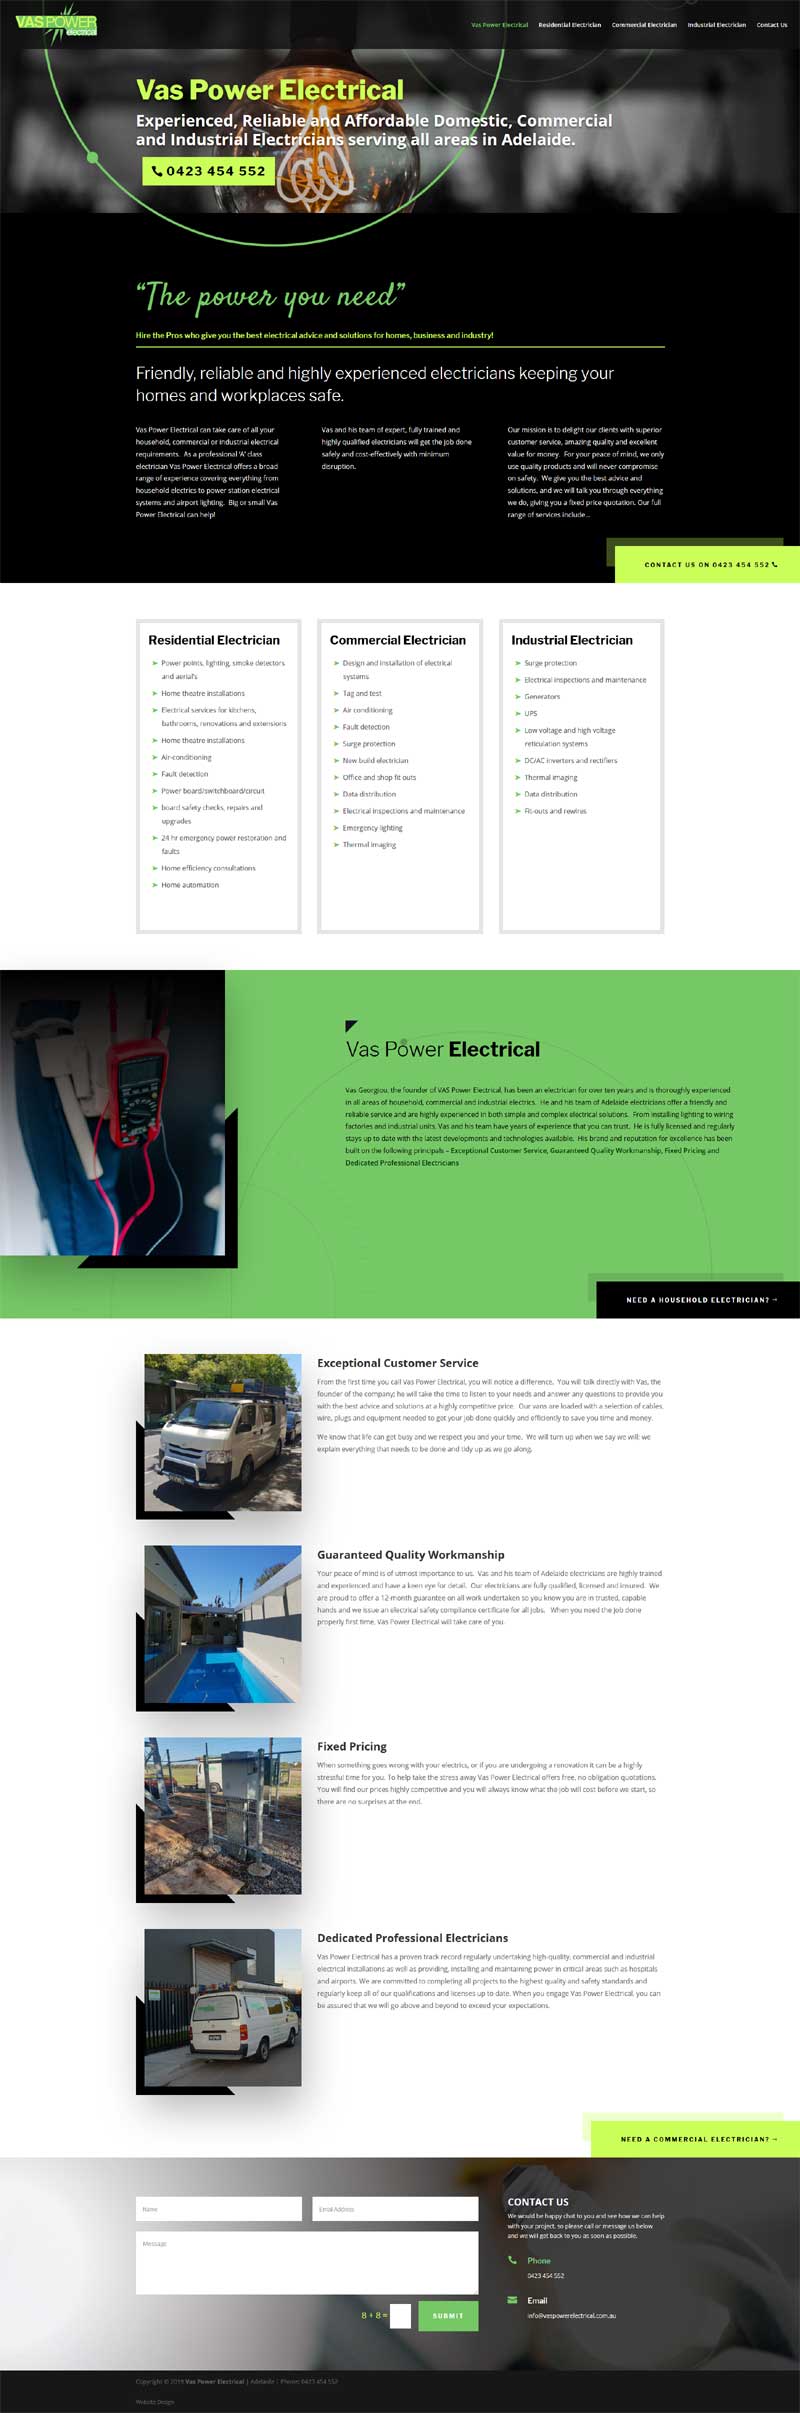 website design vas power electrical services adelaide